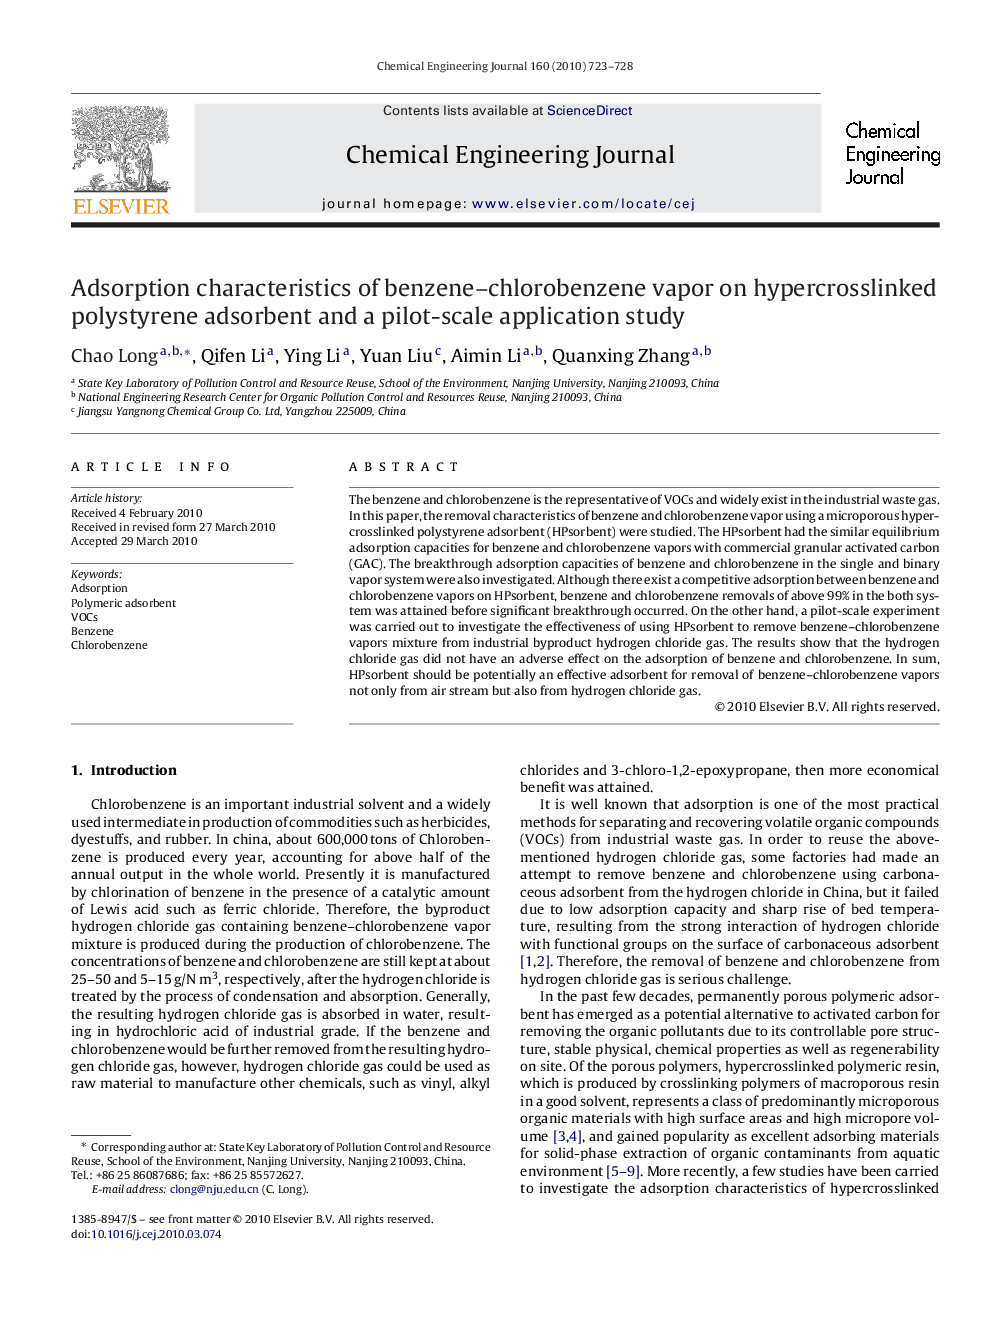 Adsorption characteristics of benzene–chlorobenzene vapor on hypercrosslinked polystyrene adsorbent and a pilot-scale application study